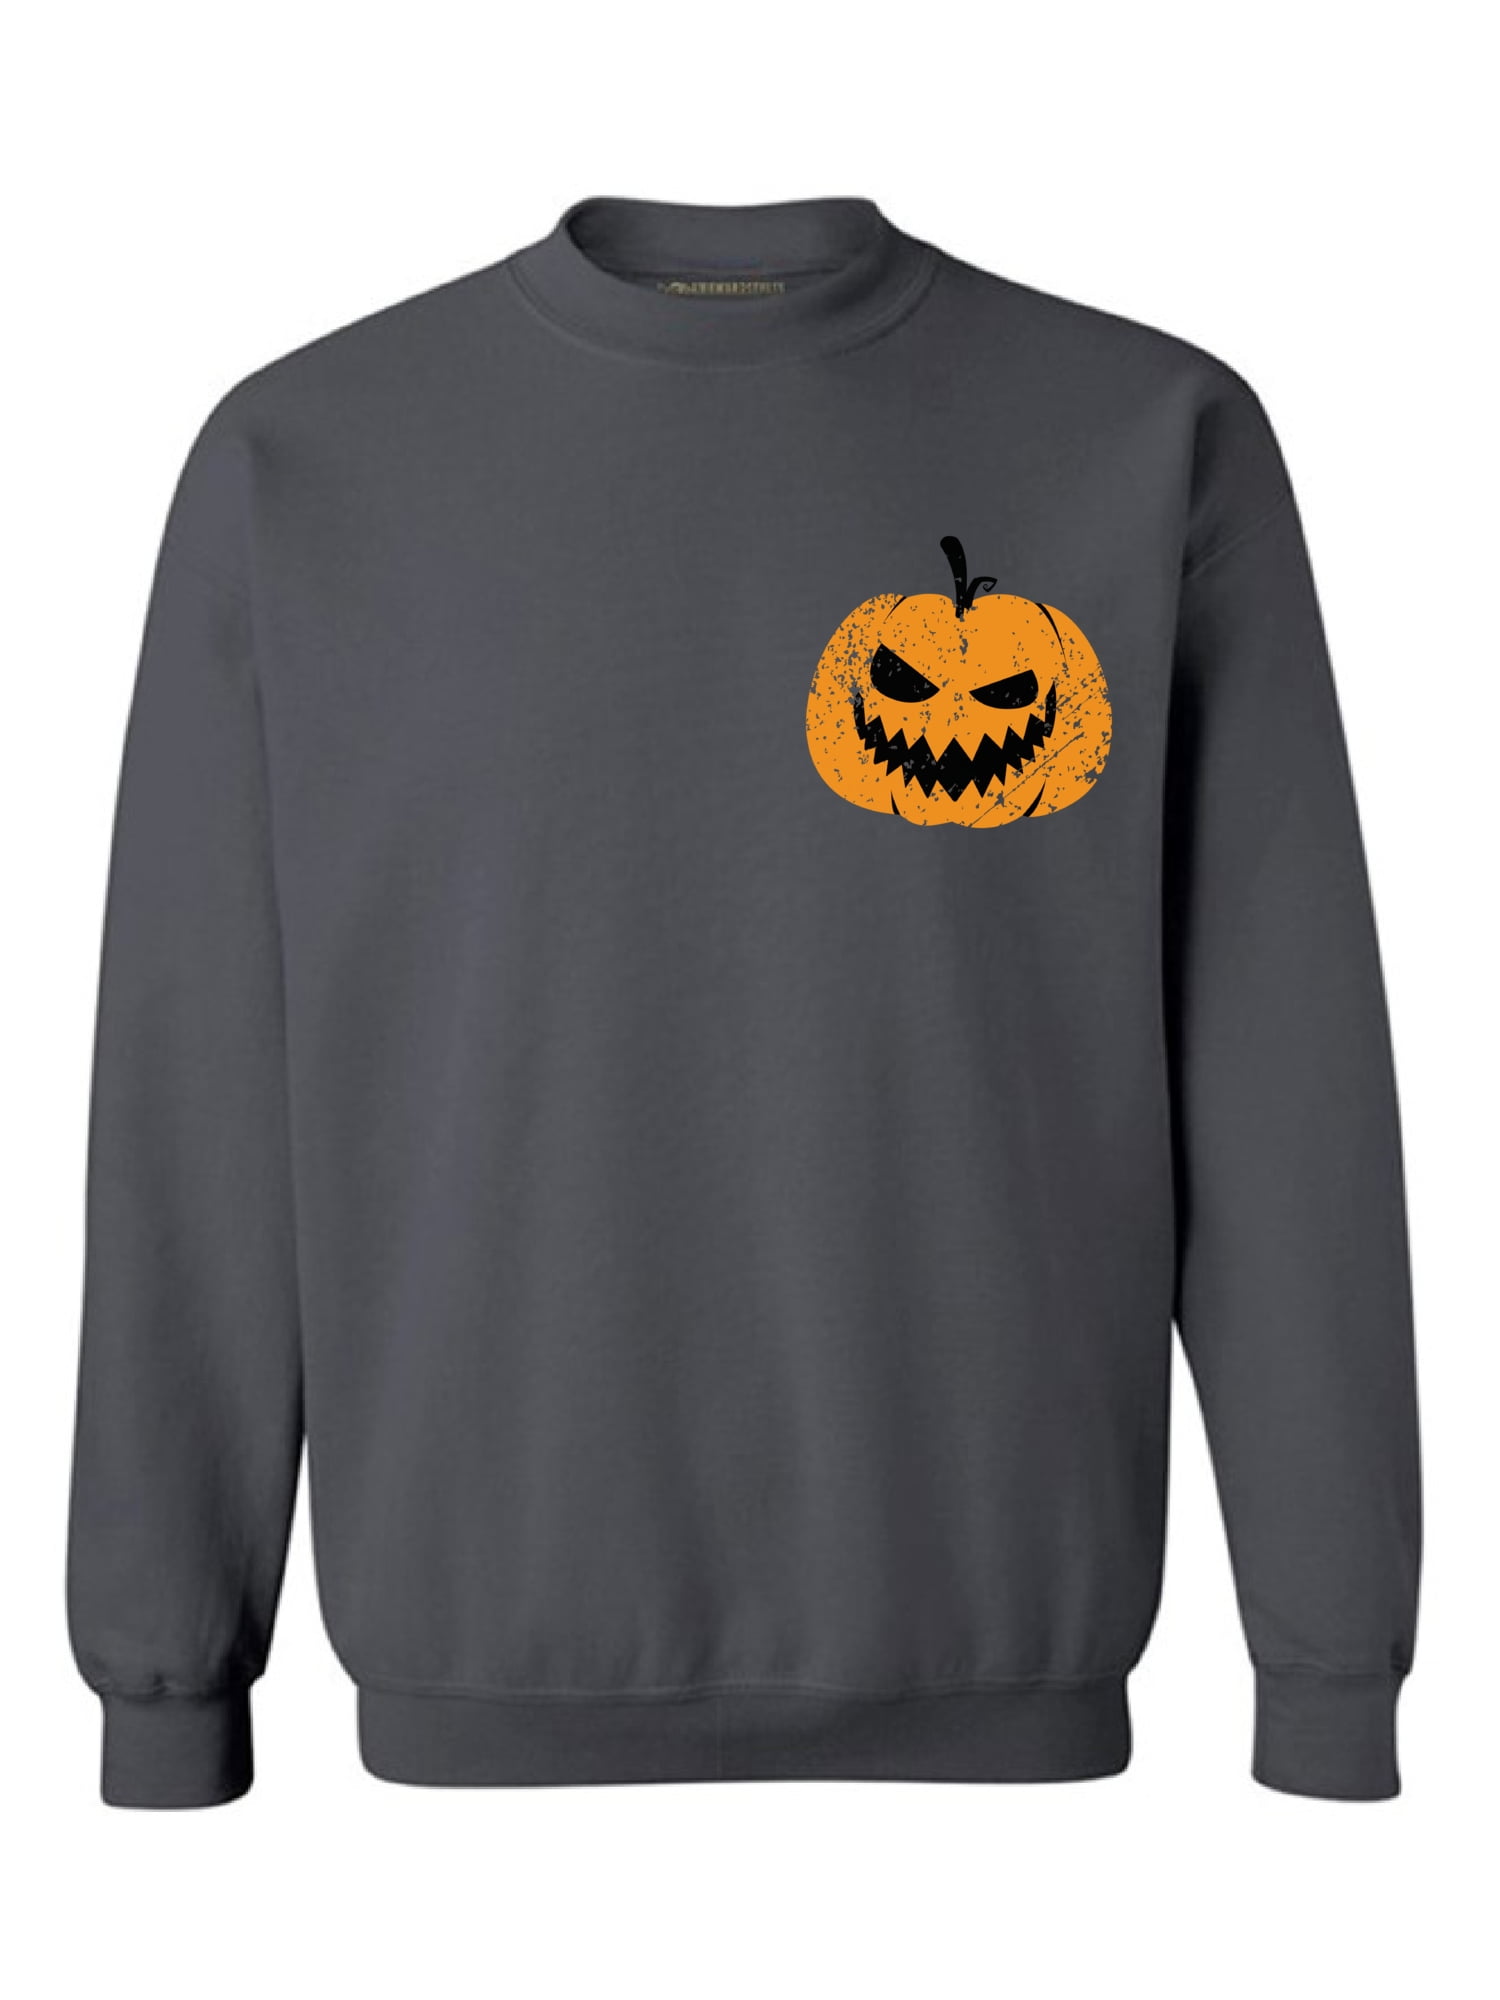 Amazon Vêtements Pulls & Gilets Pulls Sweatshirts Effrayant depuis 1972 Ghost Sugar Pumpkin Halloween Birthday Sweat à Capuche 